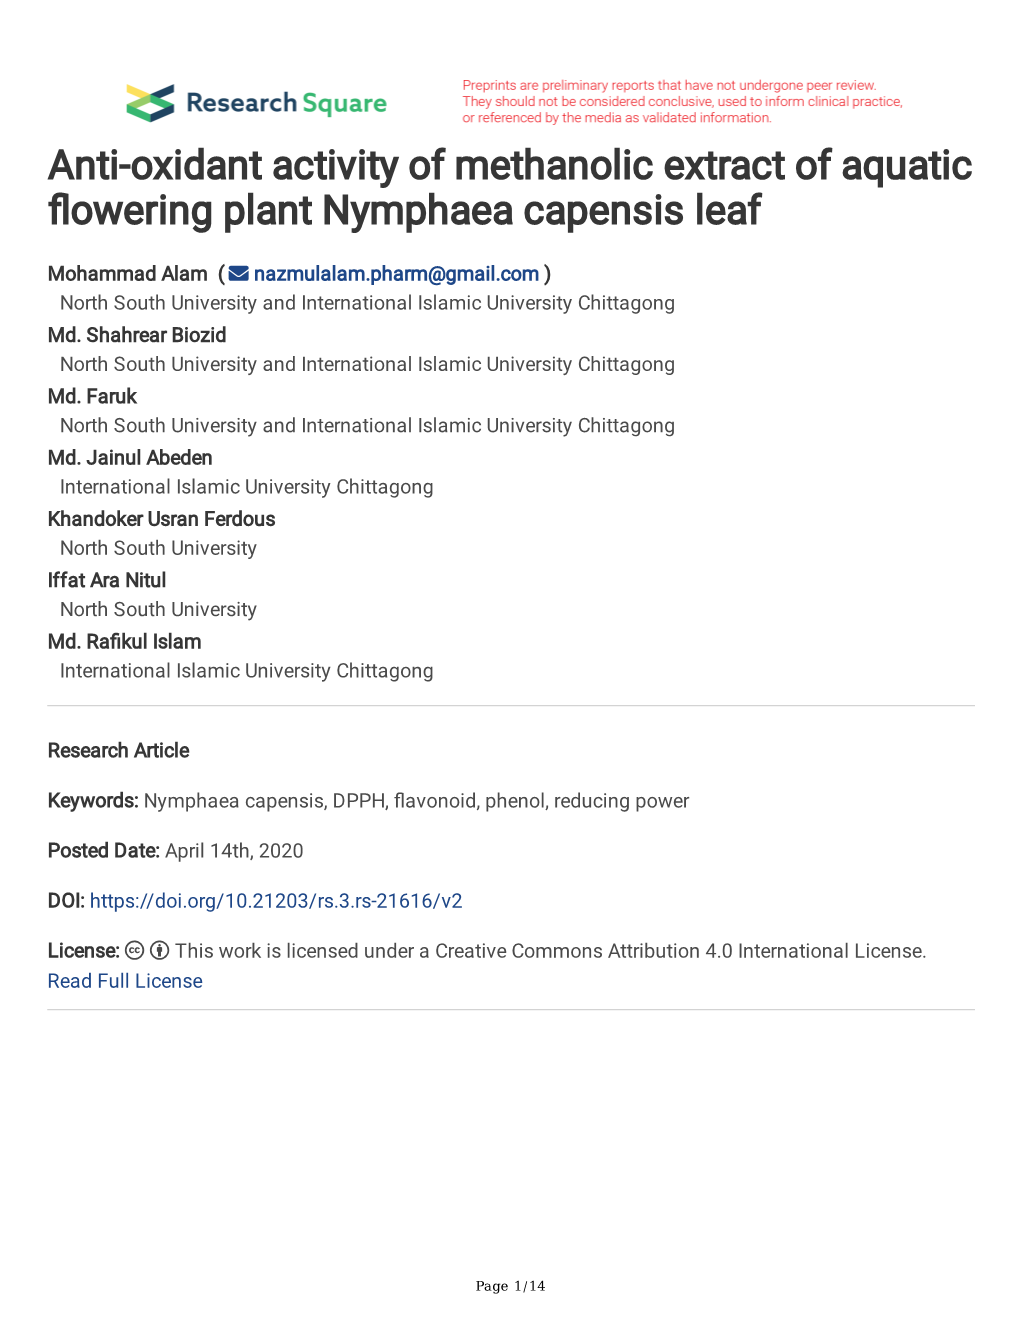 Anti-Oxidant Activity of Methanolic Extract of Aquatic Flowering Plant